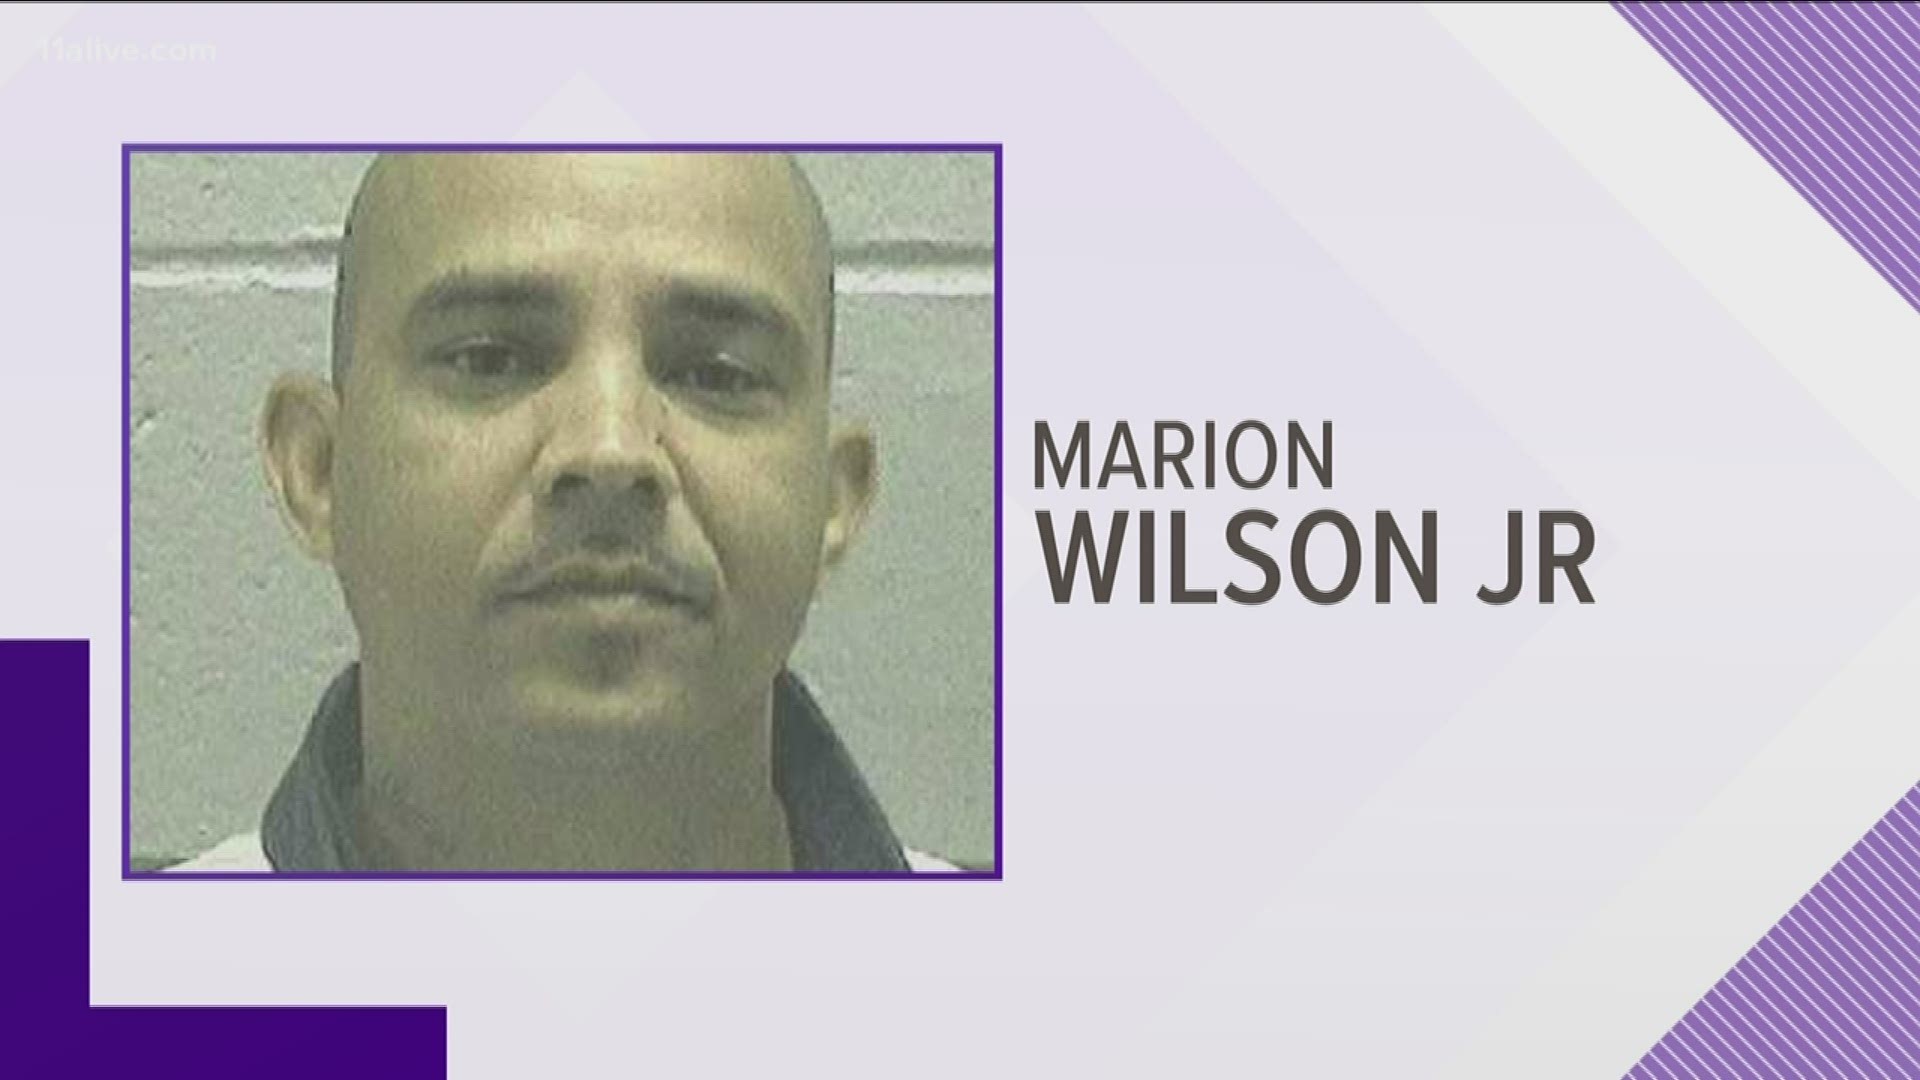 Marion Wilson, Jr. was convicted in 1997.